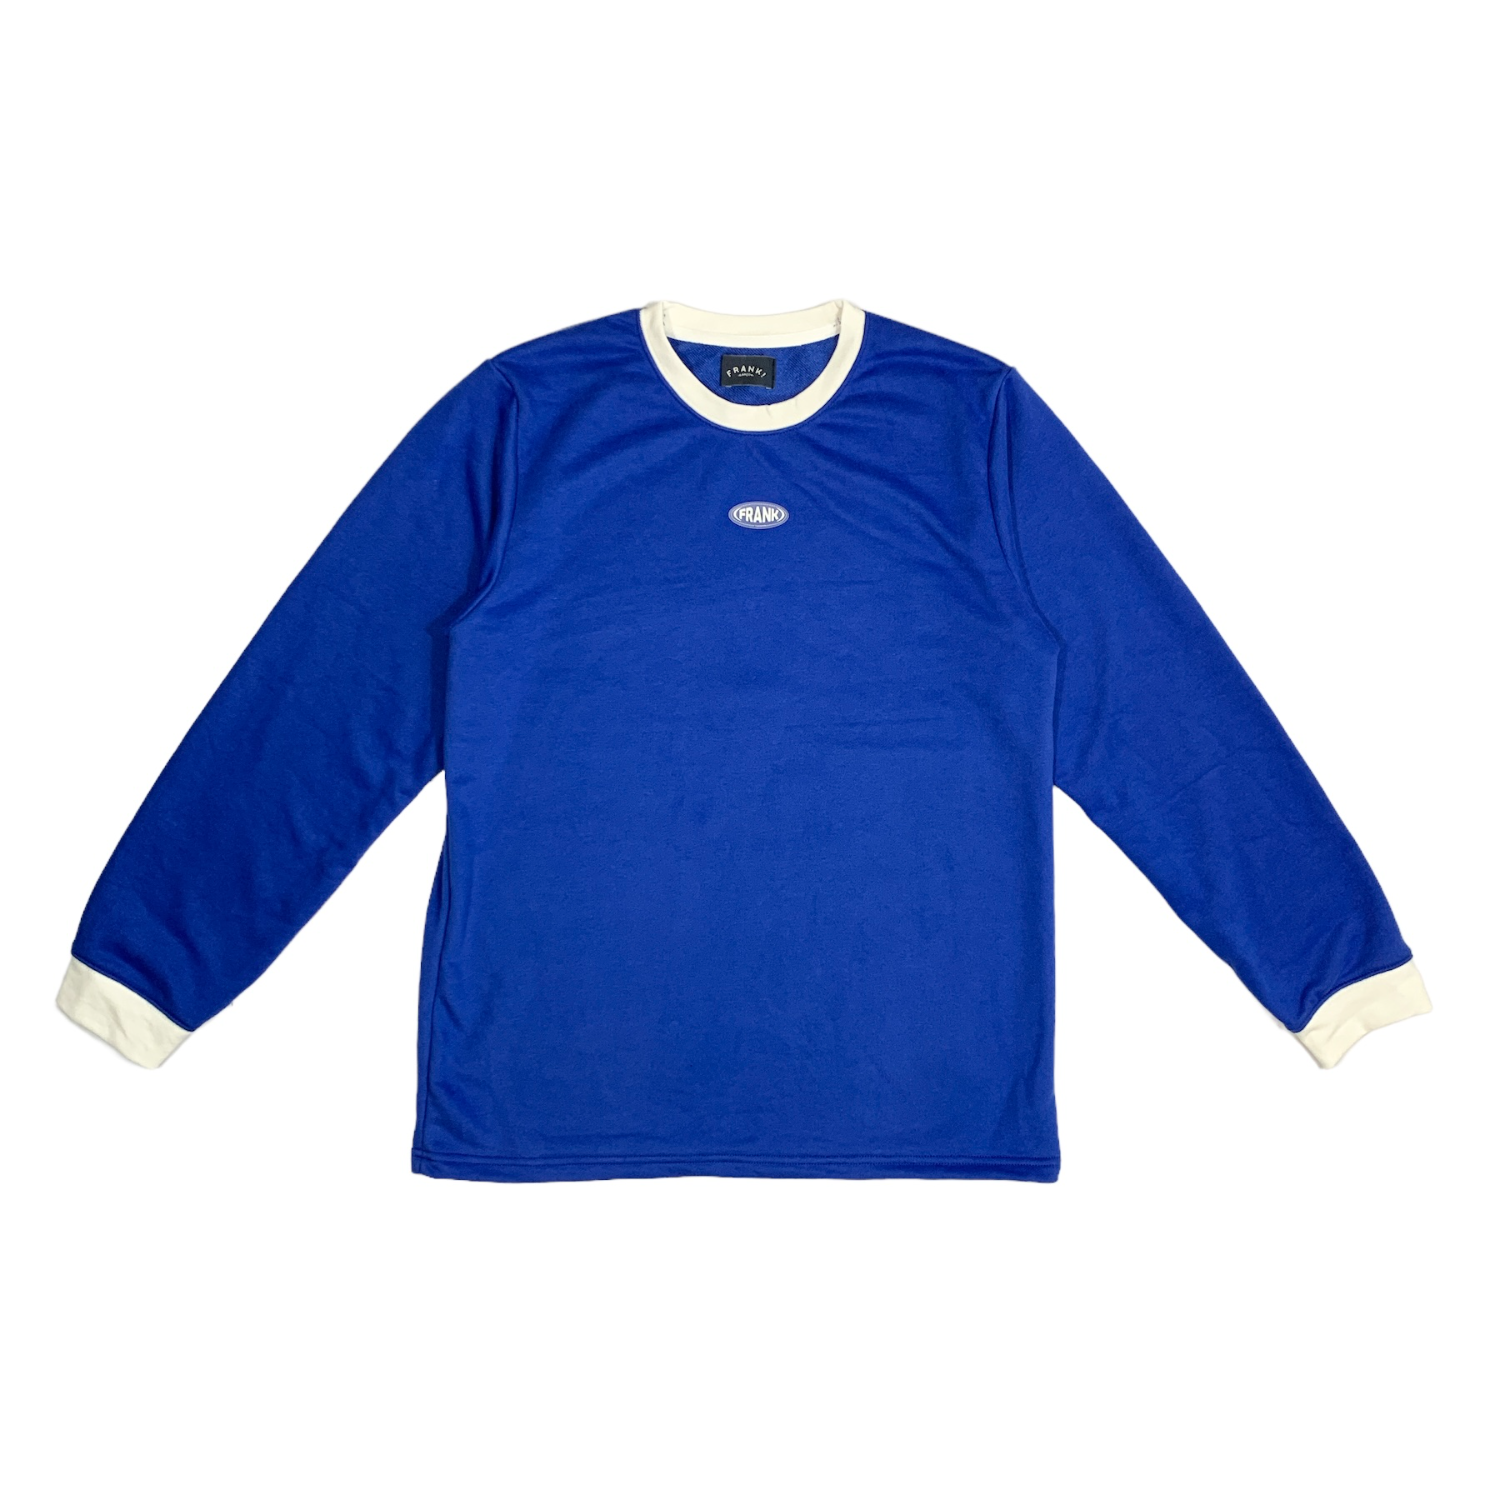 Marco Long Sleeve Shirt (Blue)